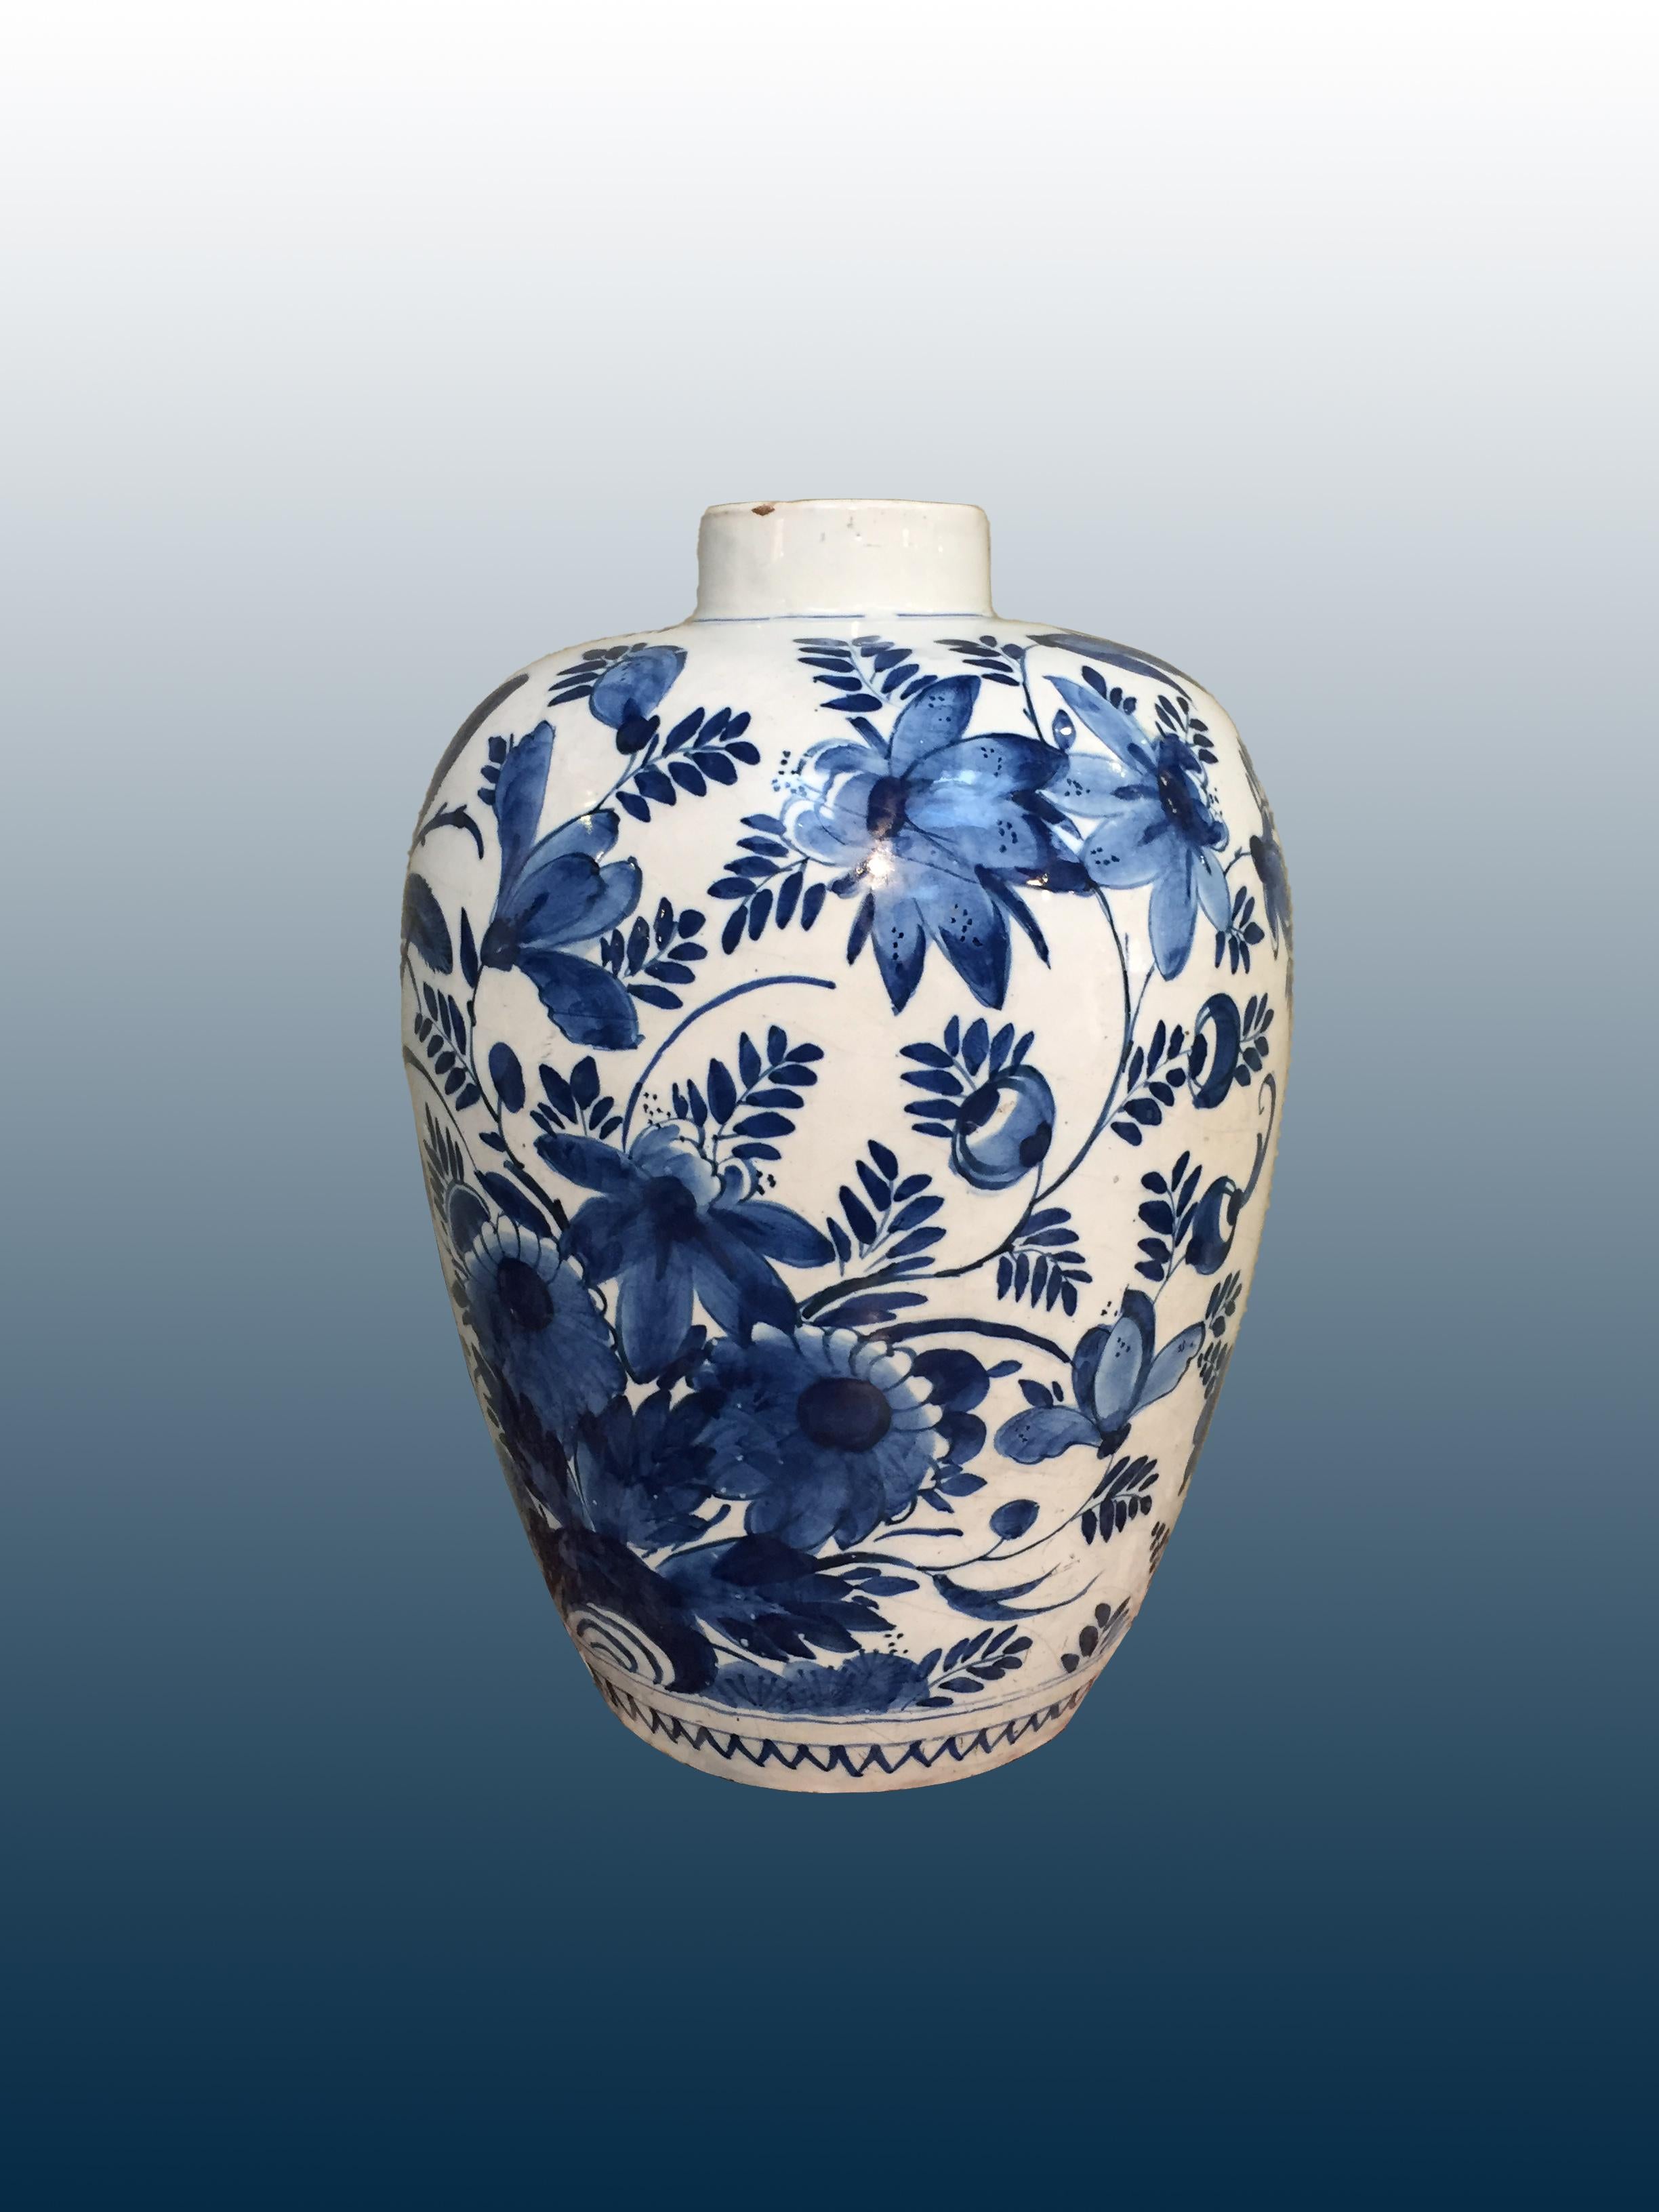 18th Century 18th century Dutch Delft Vase with Peacock